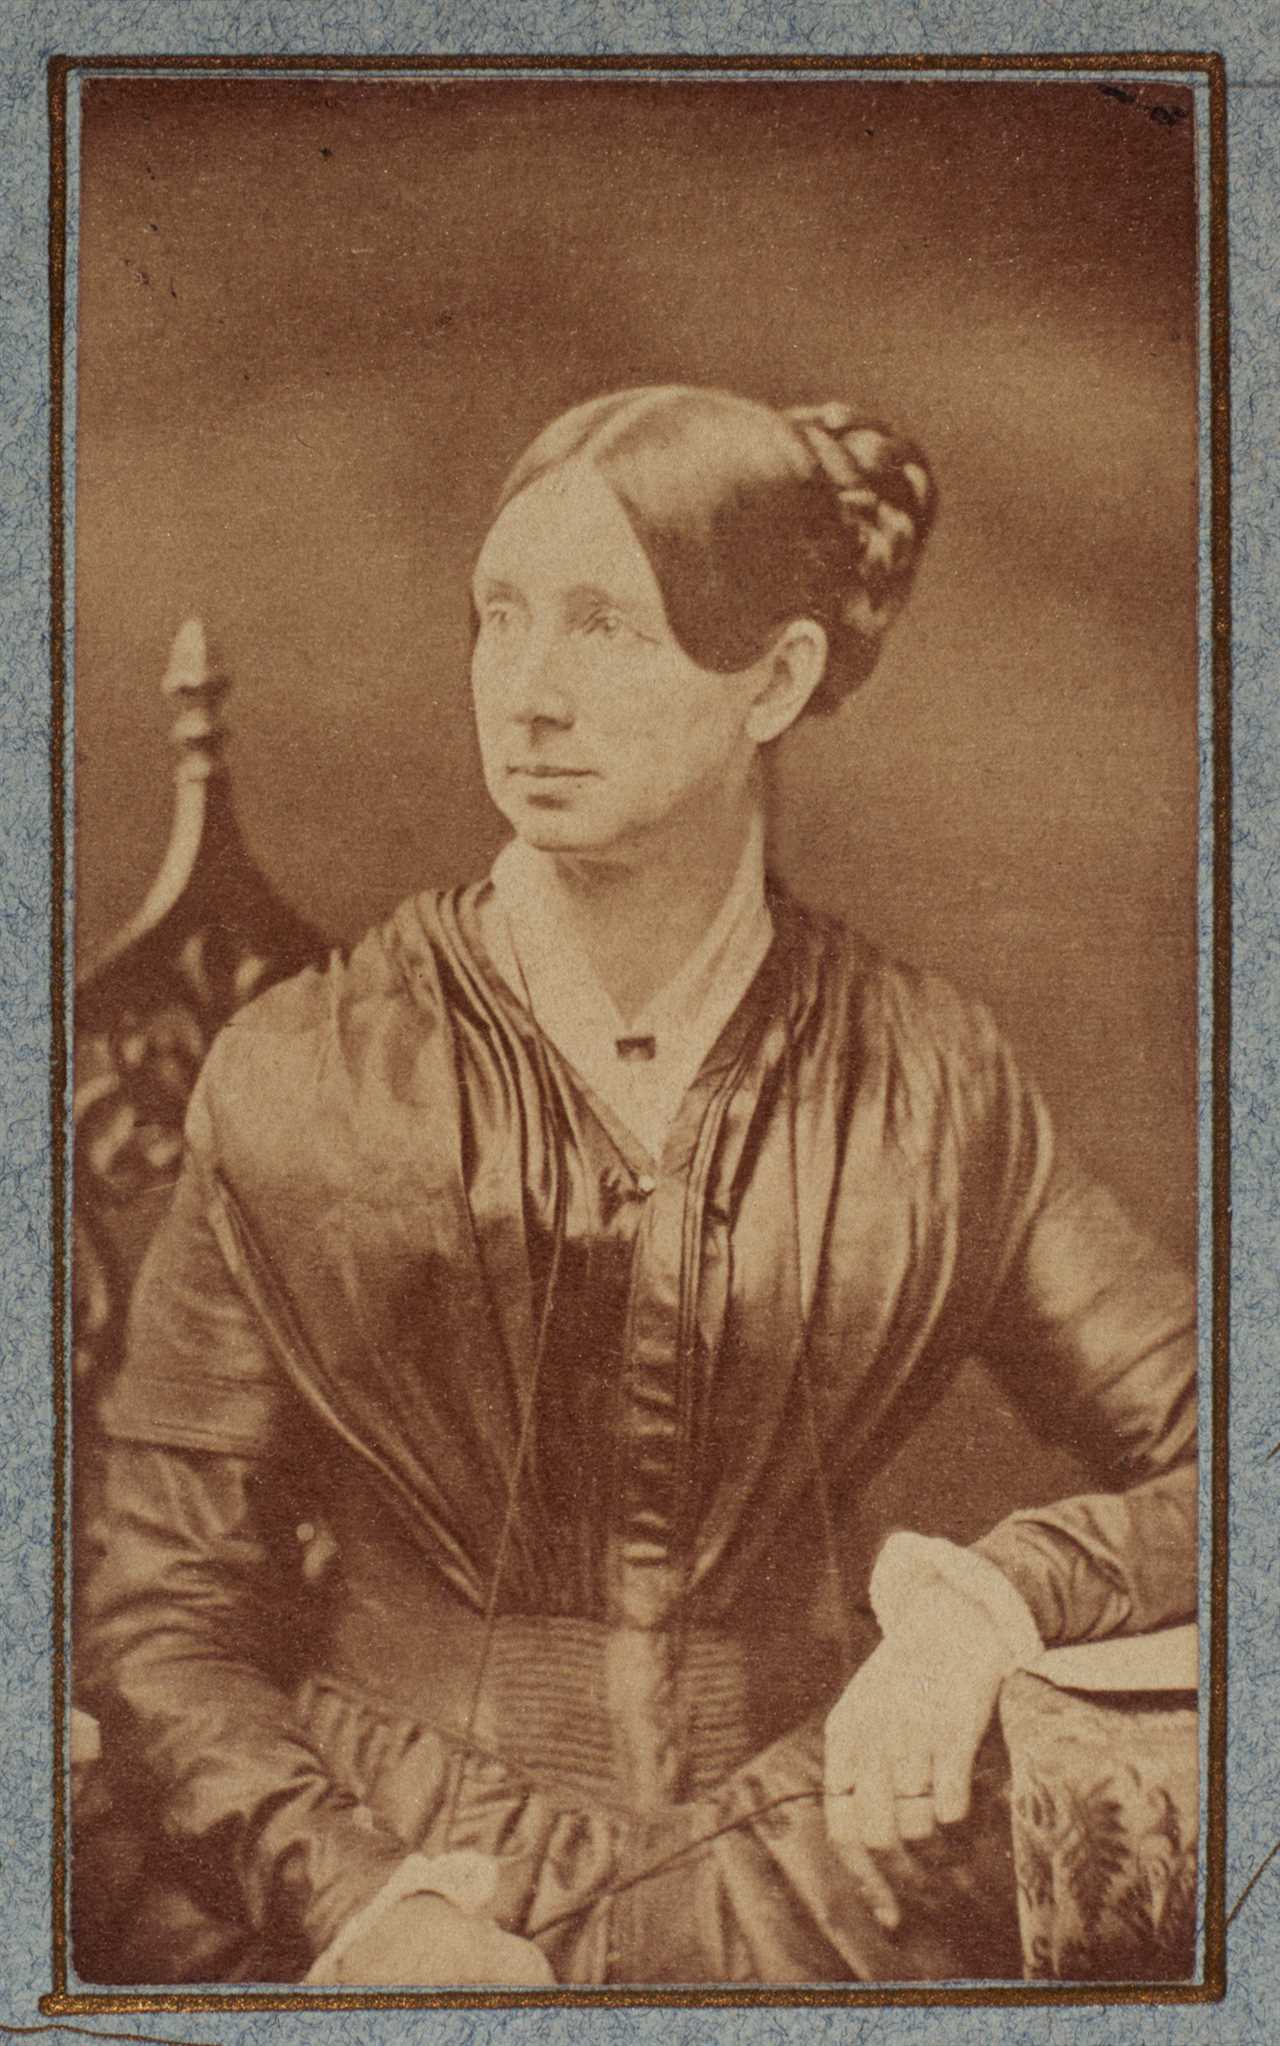 Studio portrait of Dorothea Dix, superintendent of nurses for the Union during the American Civil War.